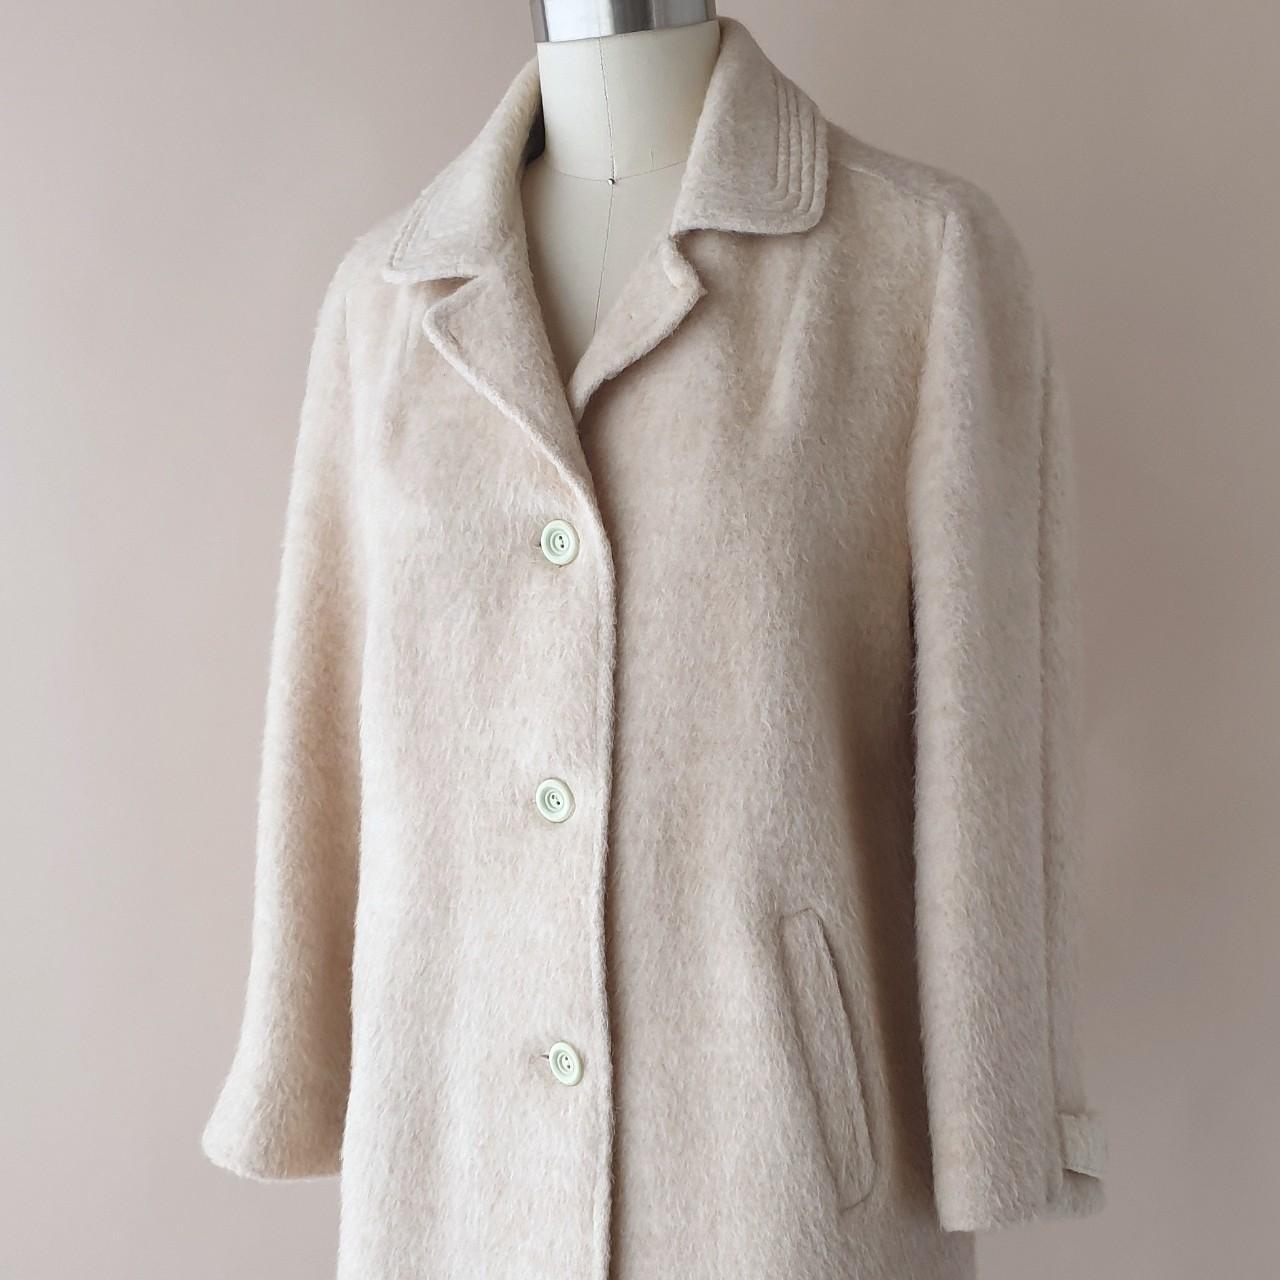 Beautiful beige coloured vintage coat. Lovely... - Depop